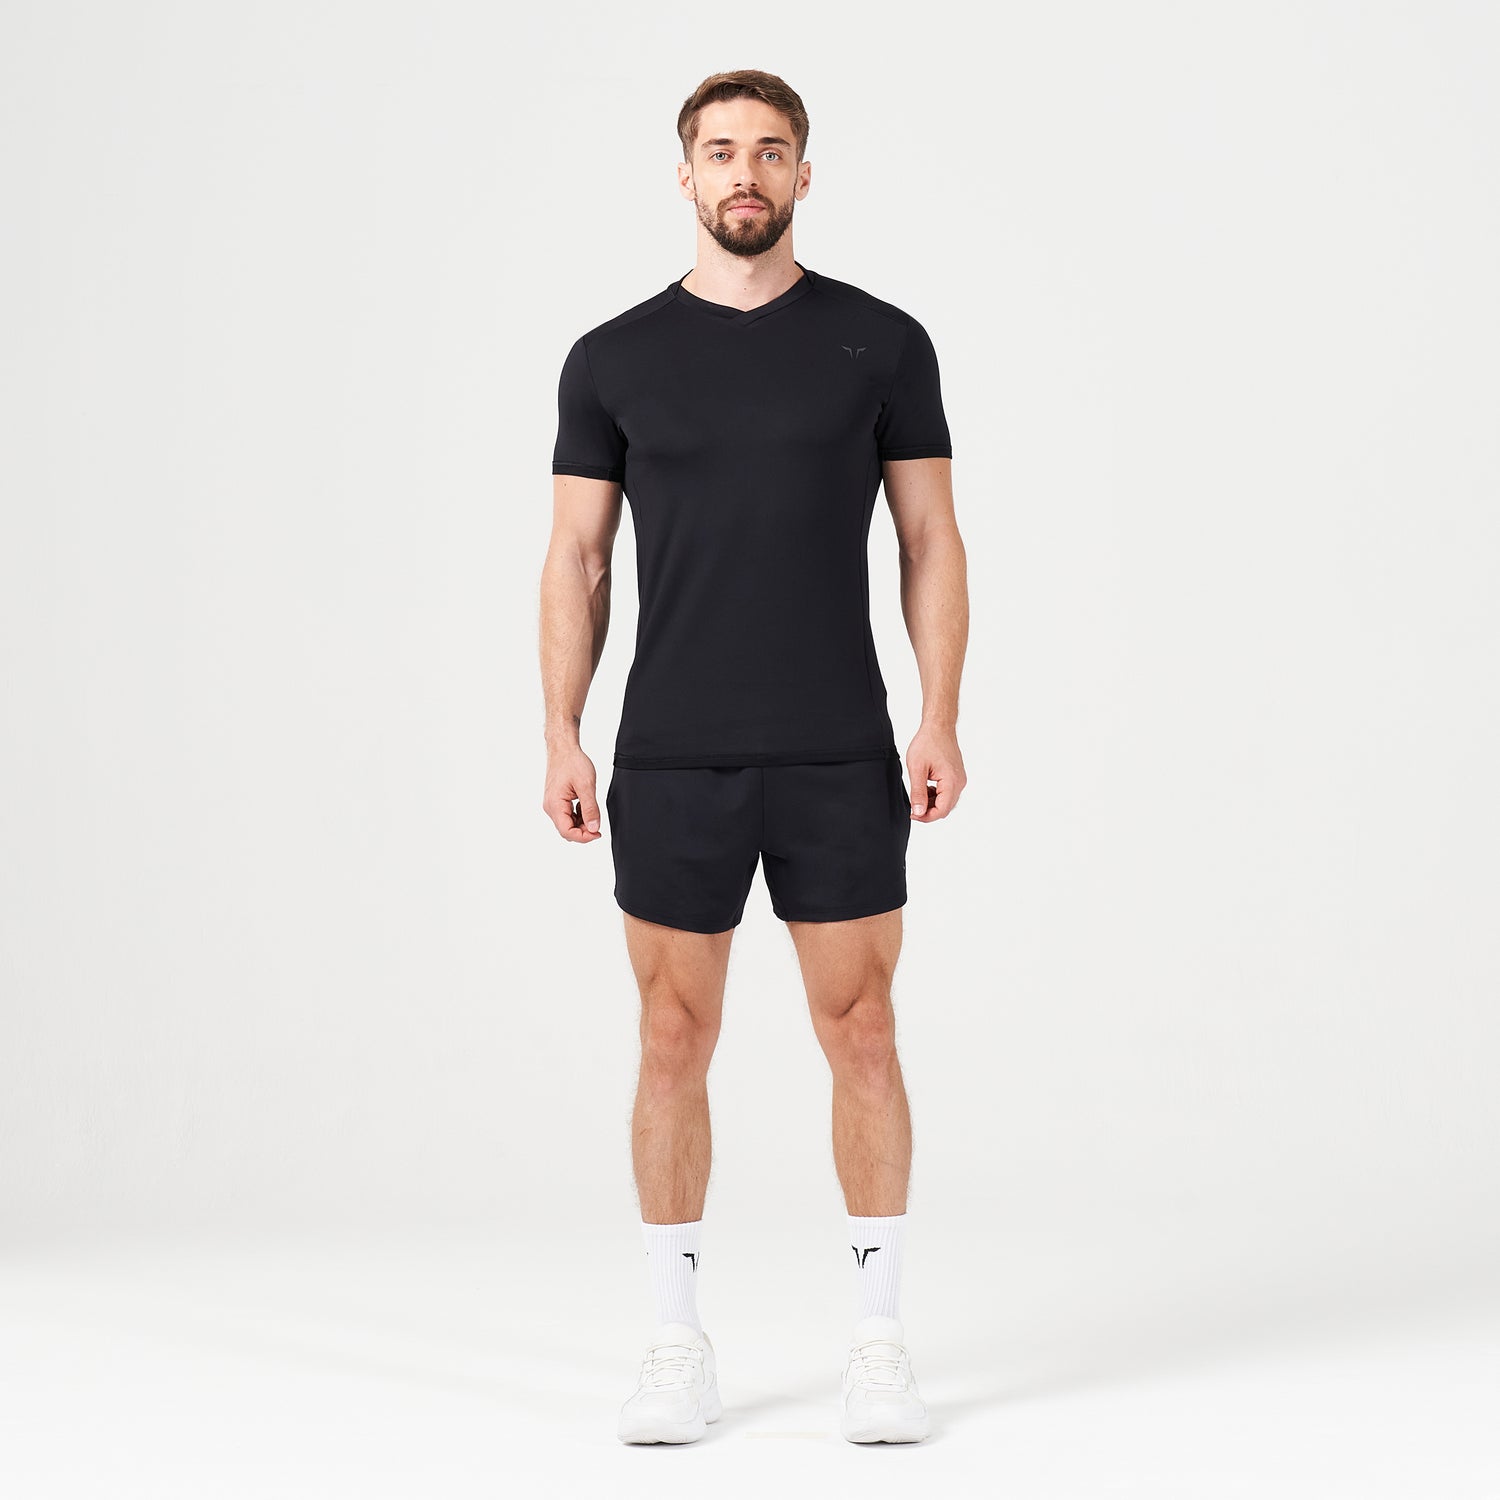 squatwolf-gym-wear-lab360-tdry-tee-black-workout-shirts-for-men